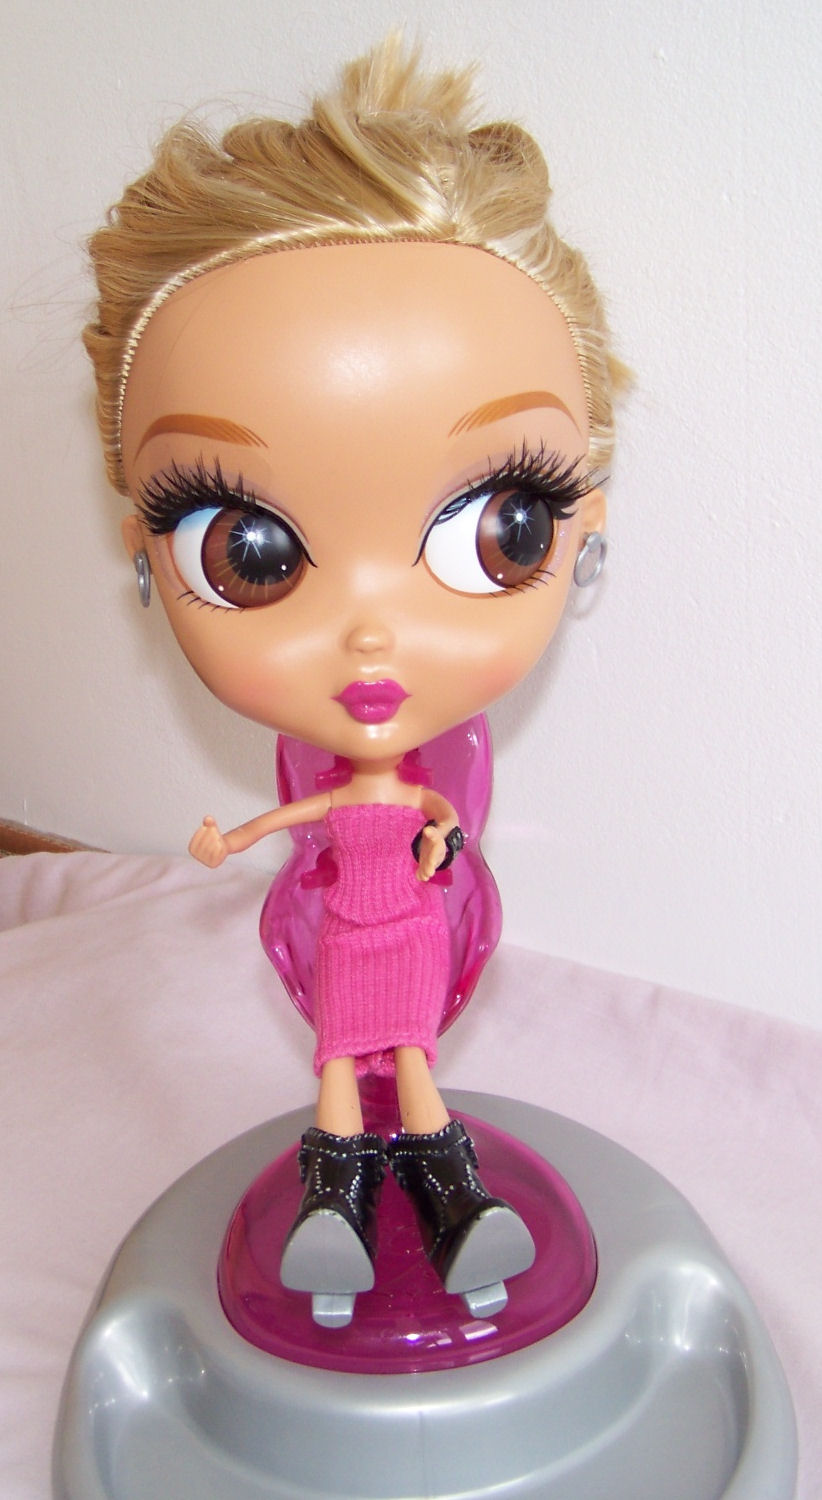 My modded Beauty Cuties – Barbie hybrid doll – Tutorials